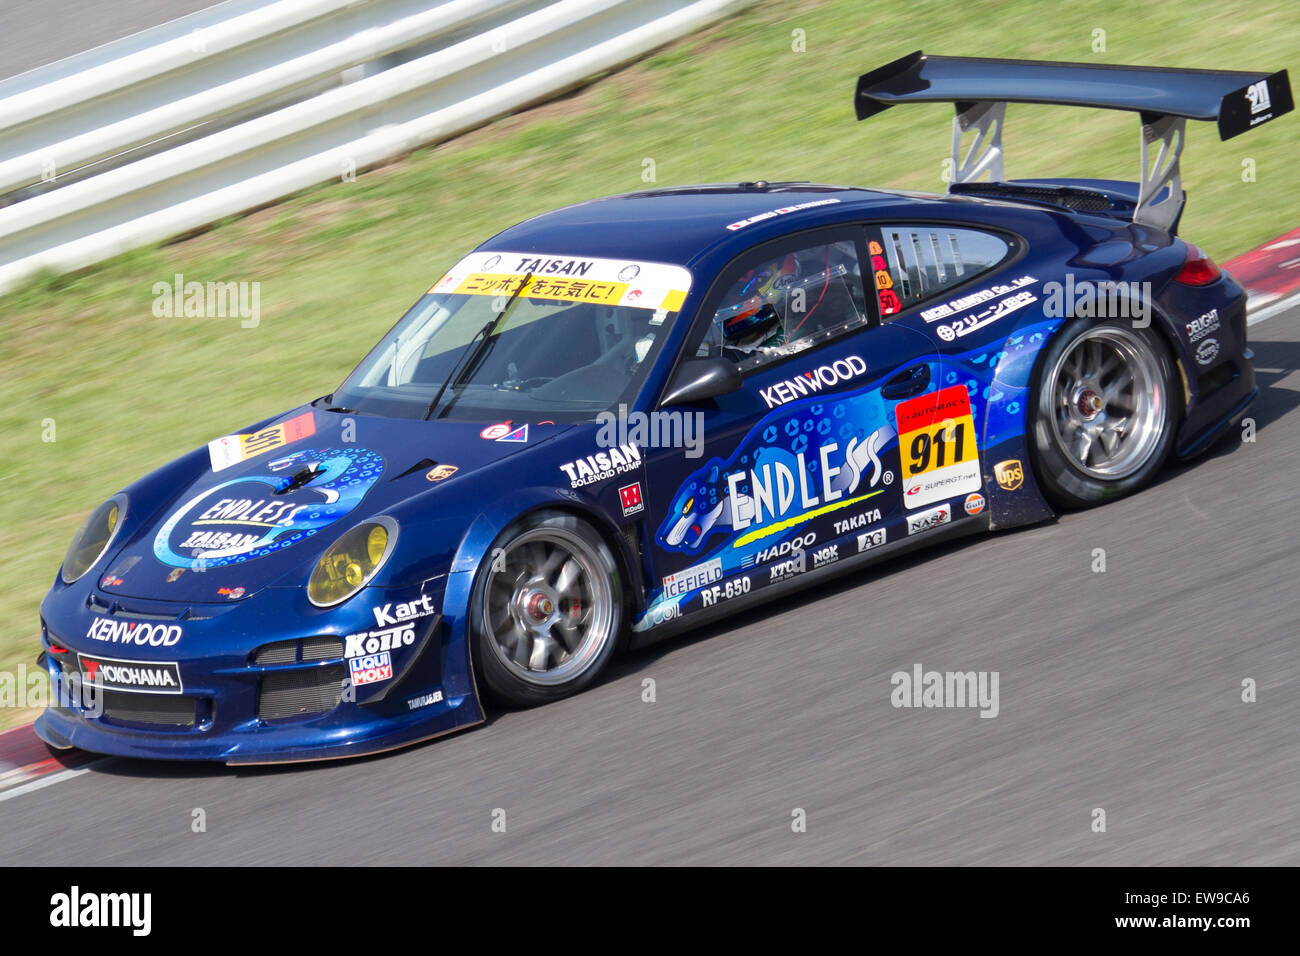 Endless Taisan 911 2012 Super GT Sugo free practice Stock Photo